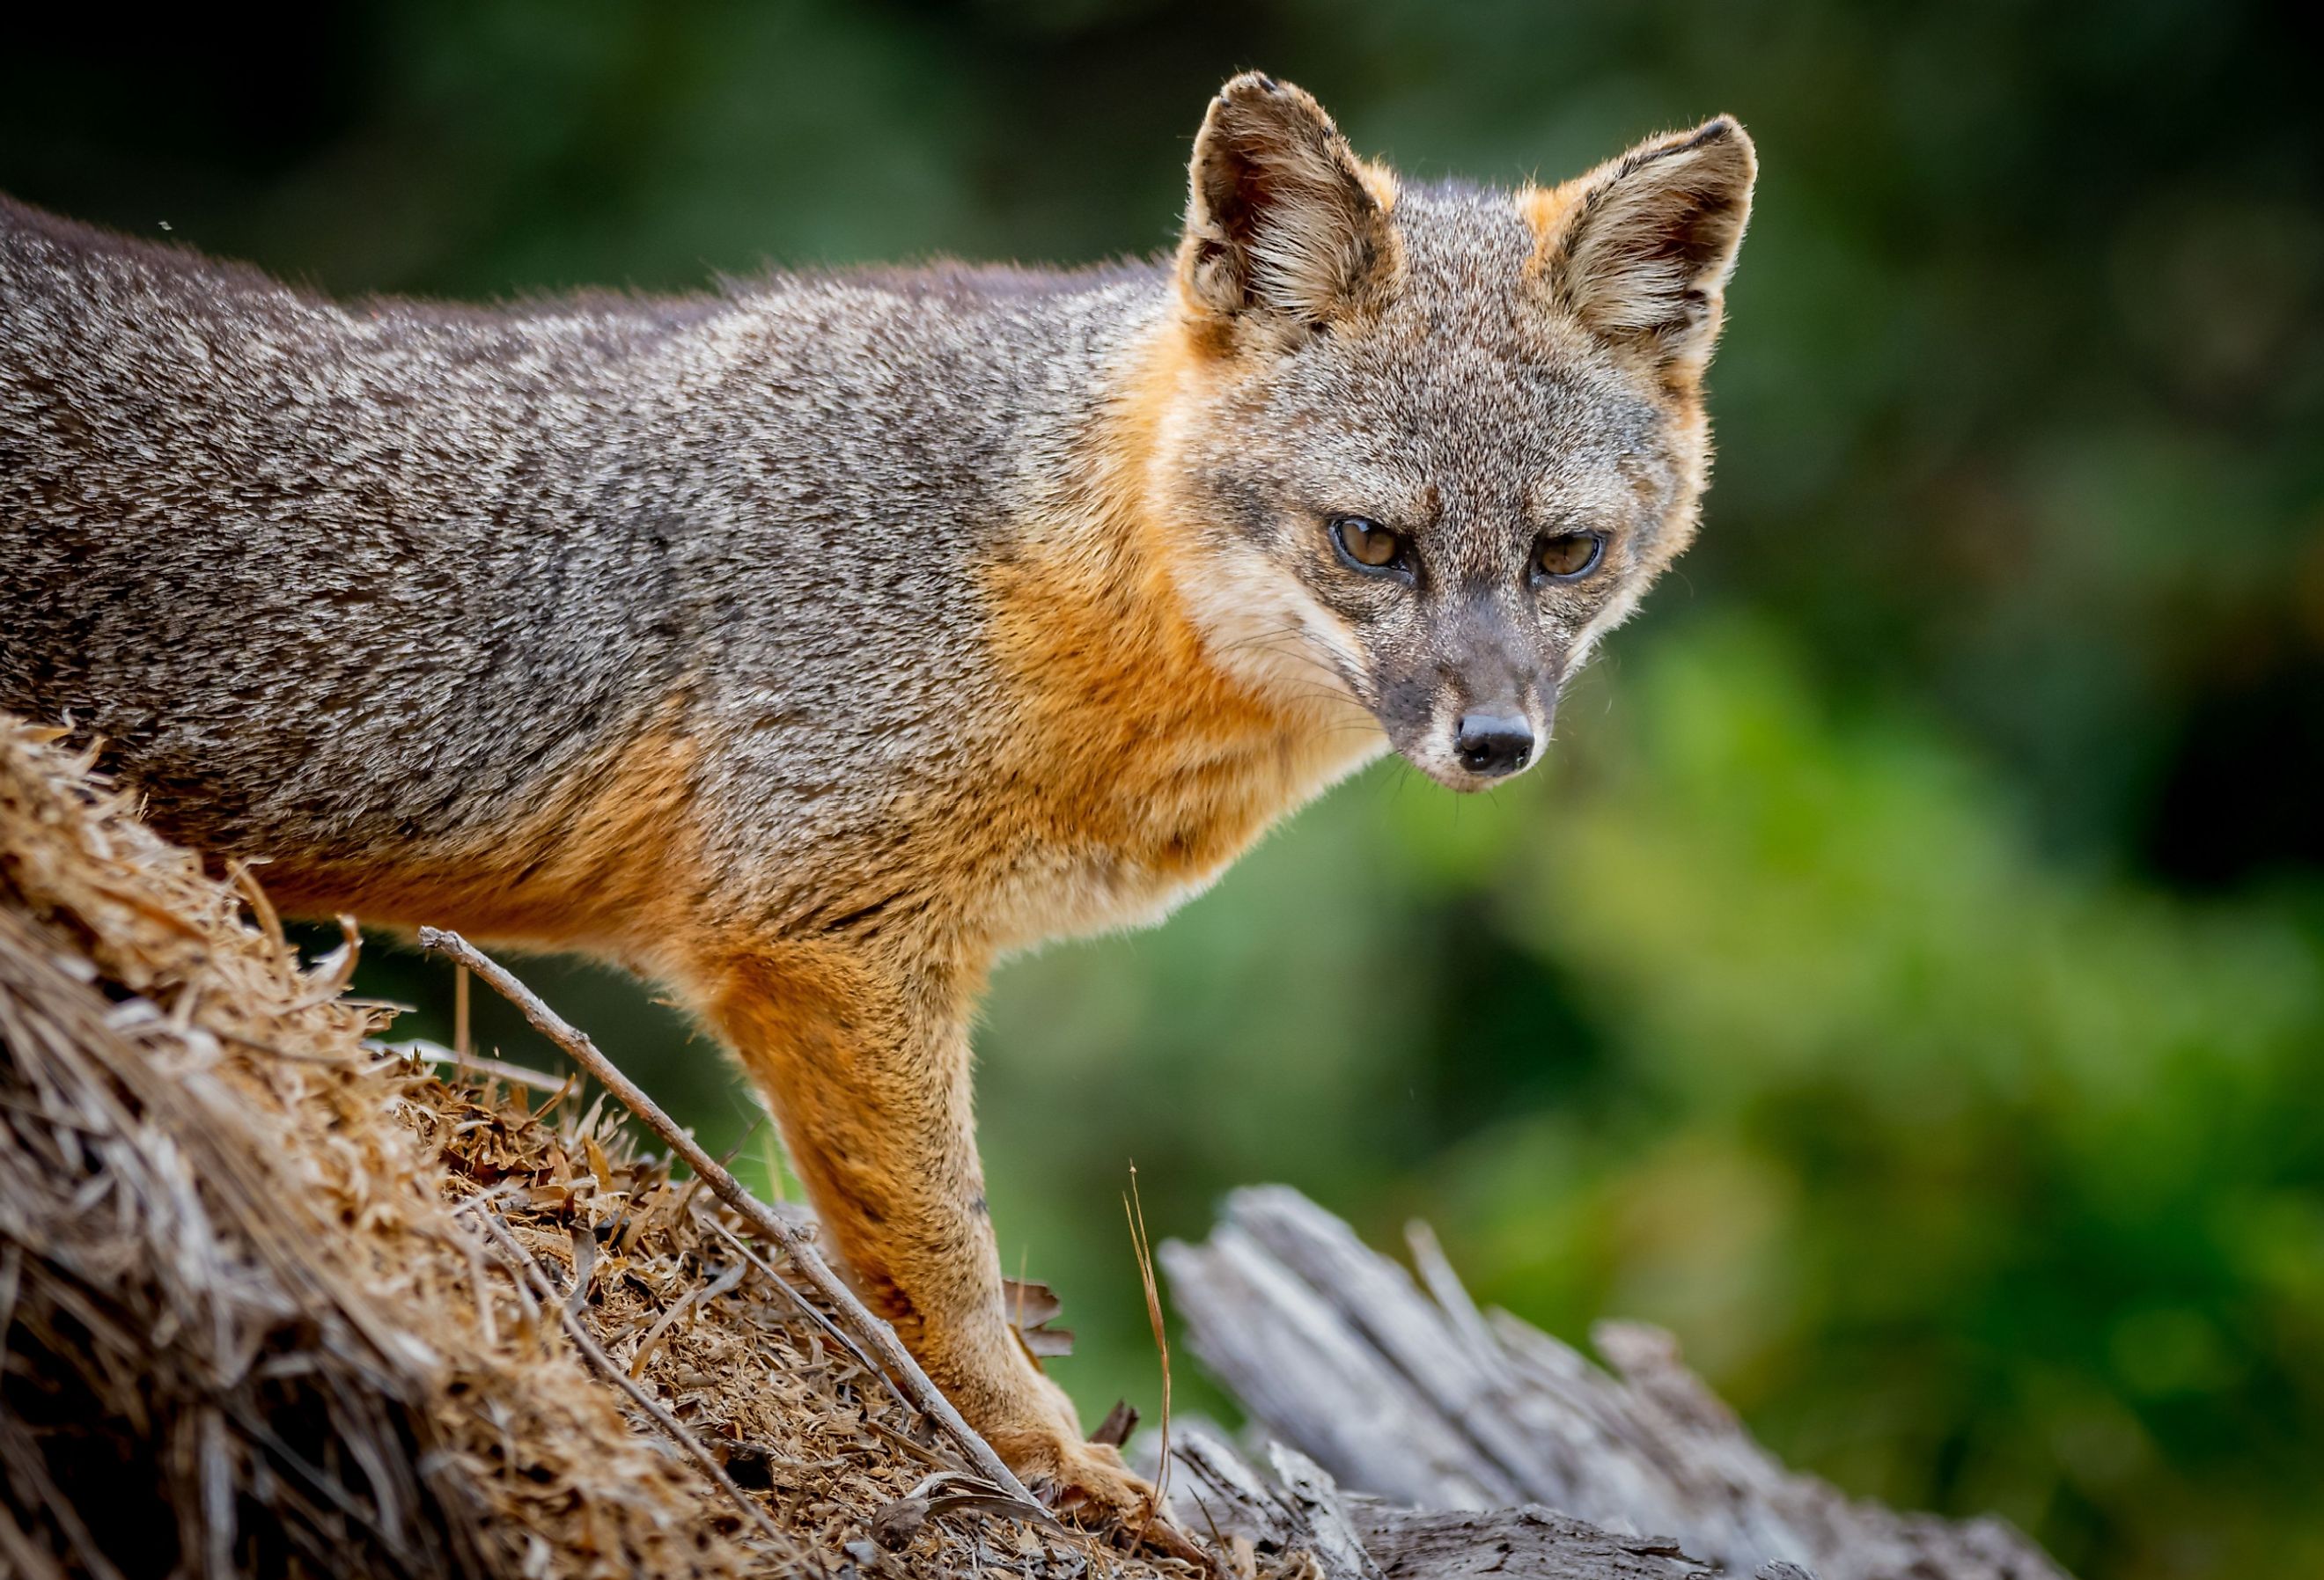 Close-up image of an island fox (Urocyon littoralis) posing on Santa Cruz Island.